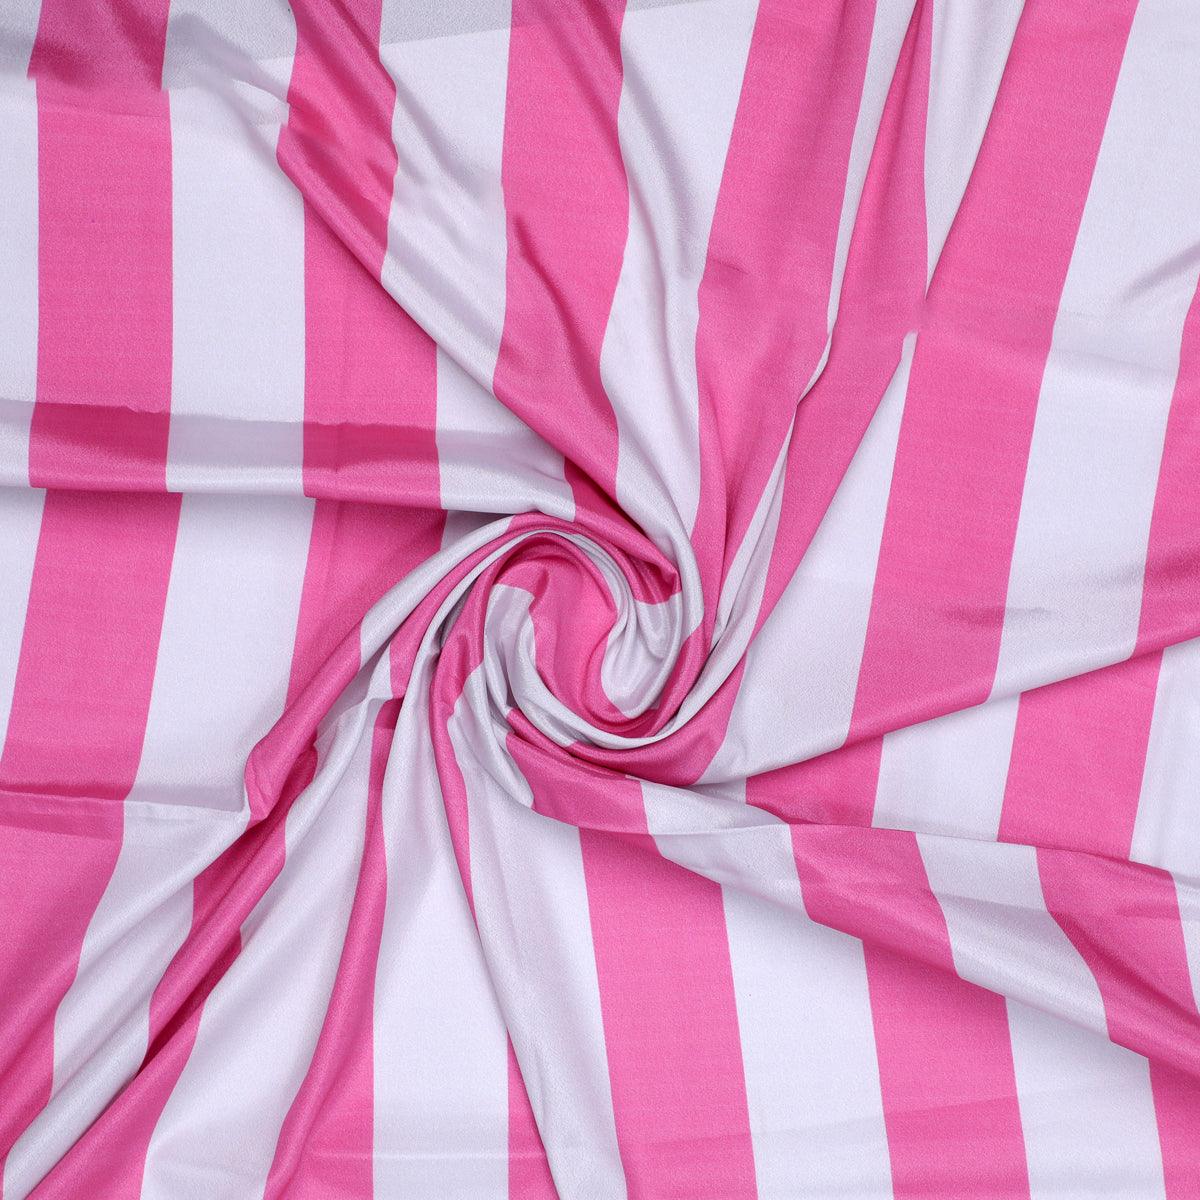 Peach And Pink Stripes Digital Printed Fabric - Crepe - FAB VOGUE Studio®